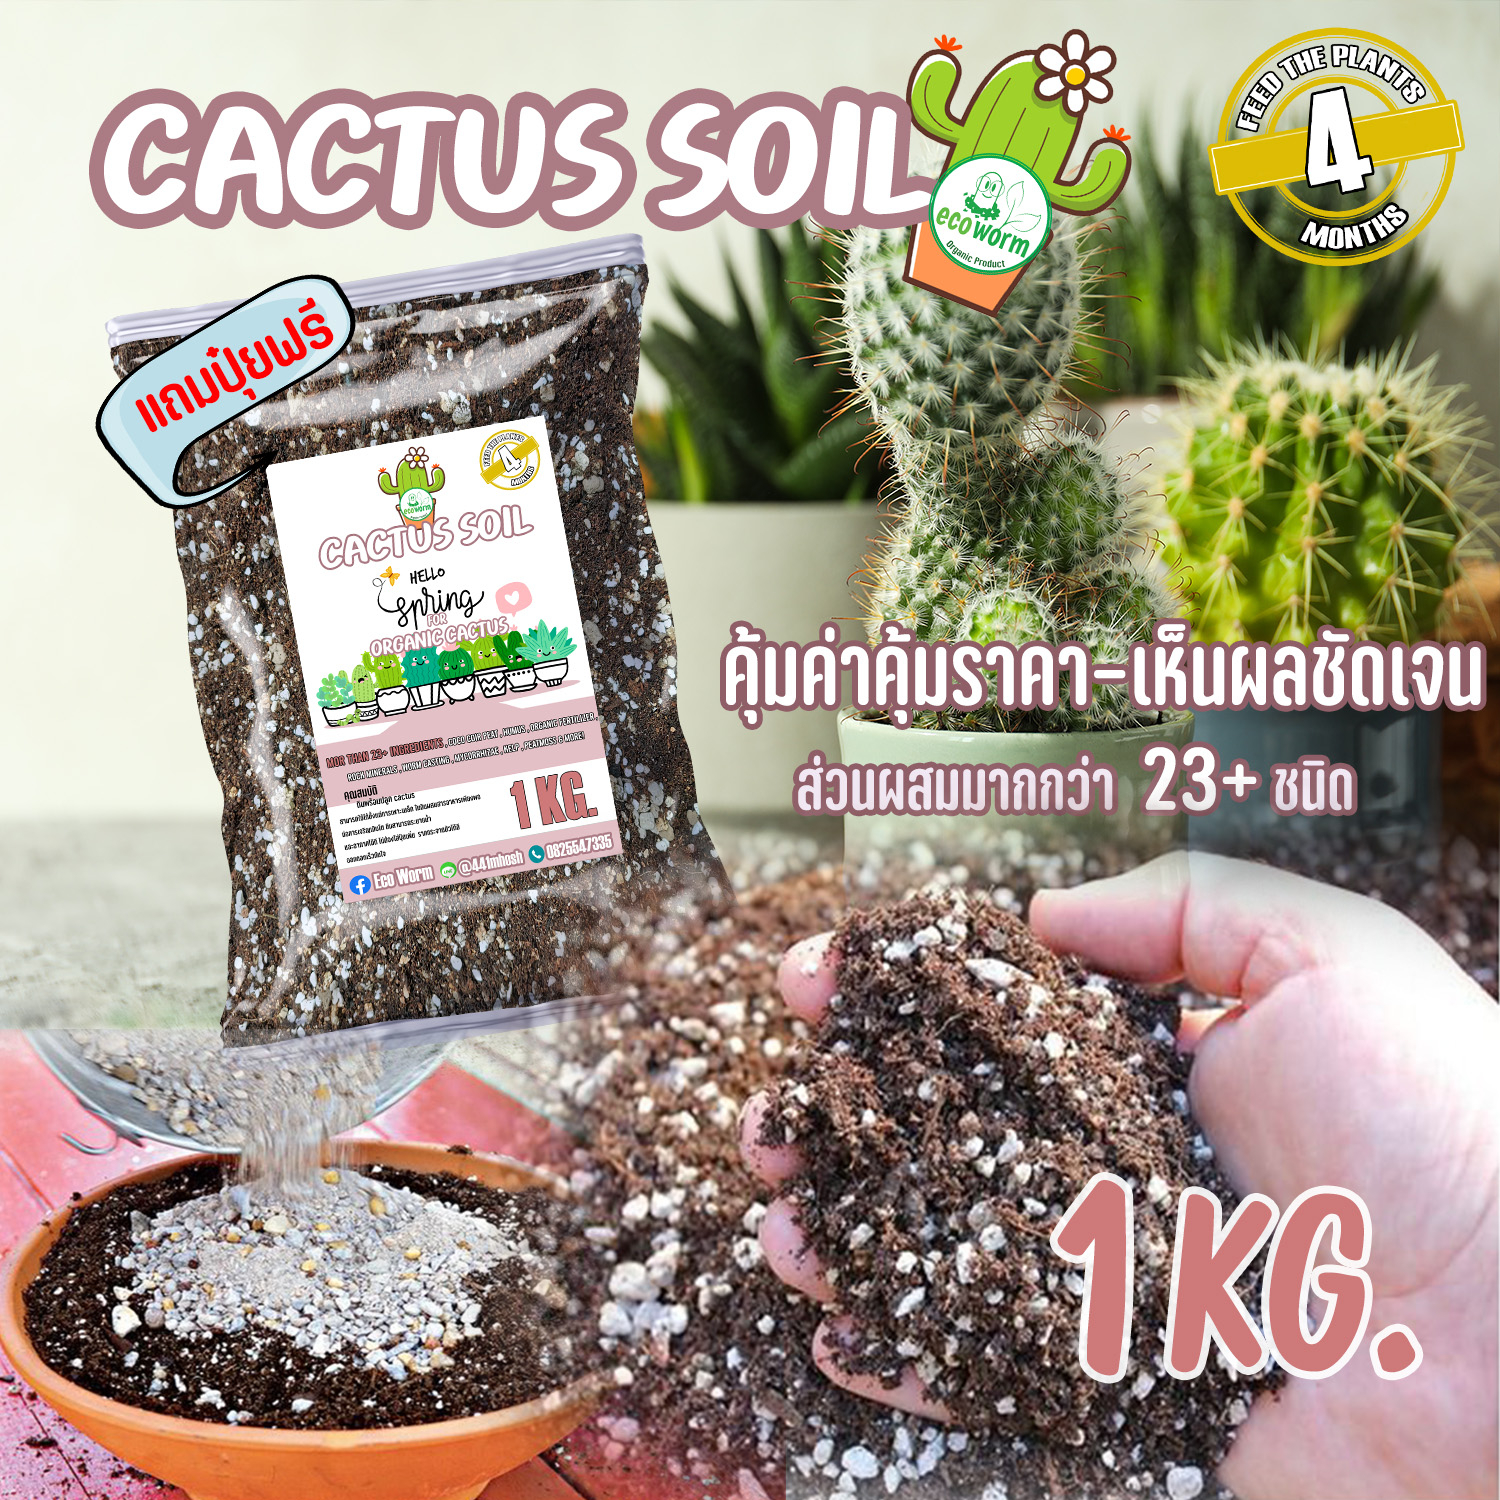 CACTUS SOIL (1Kg) ดินปลูกแคคตัส Porous  กระบองเพชร  ไม้อวบน้ำ (สามารถใช้ไค่าส่งด้ตั้งแต่เพาะเมล็ด)  มีโค๊ดช่วยค่าส่ง